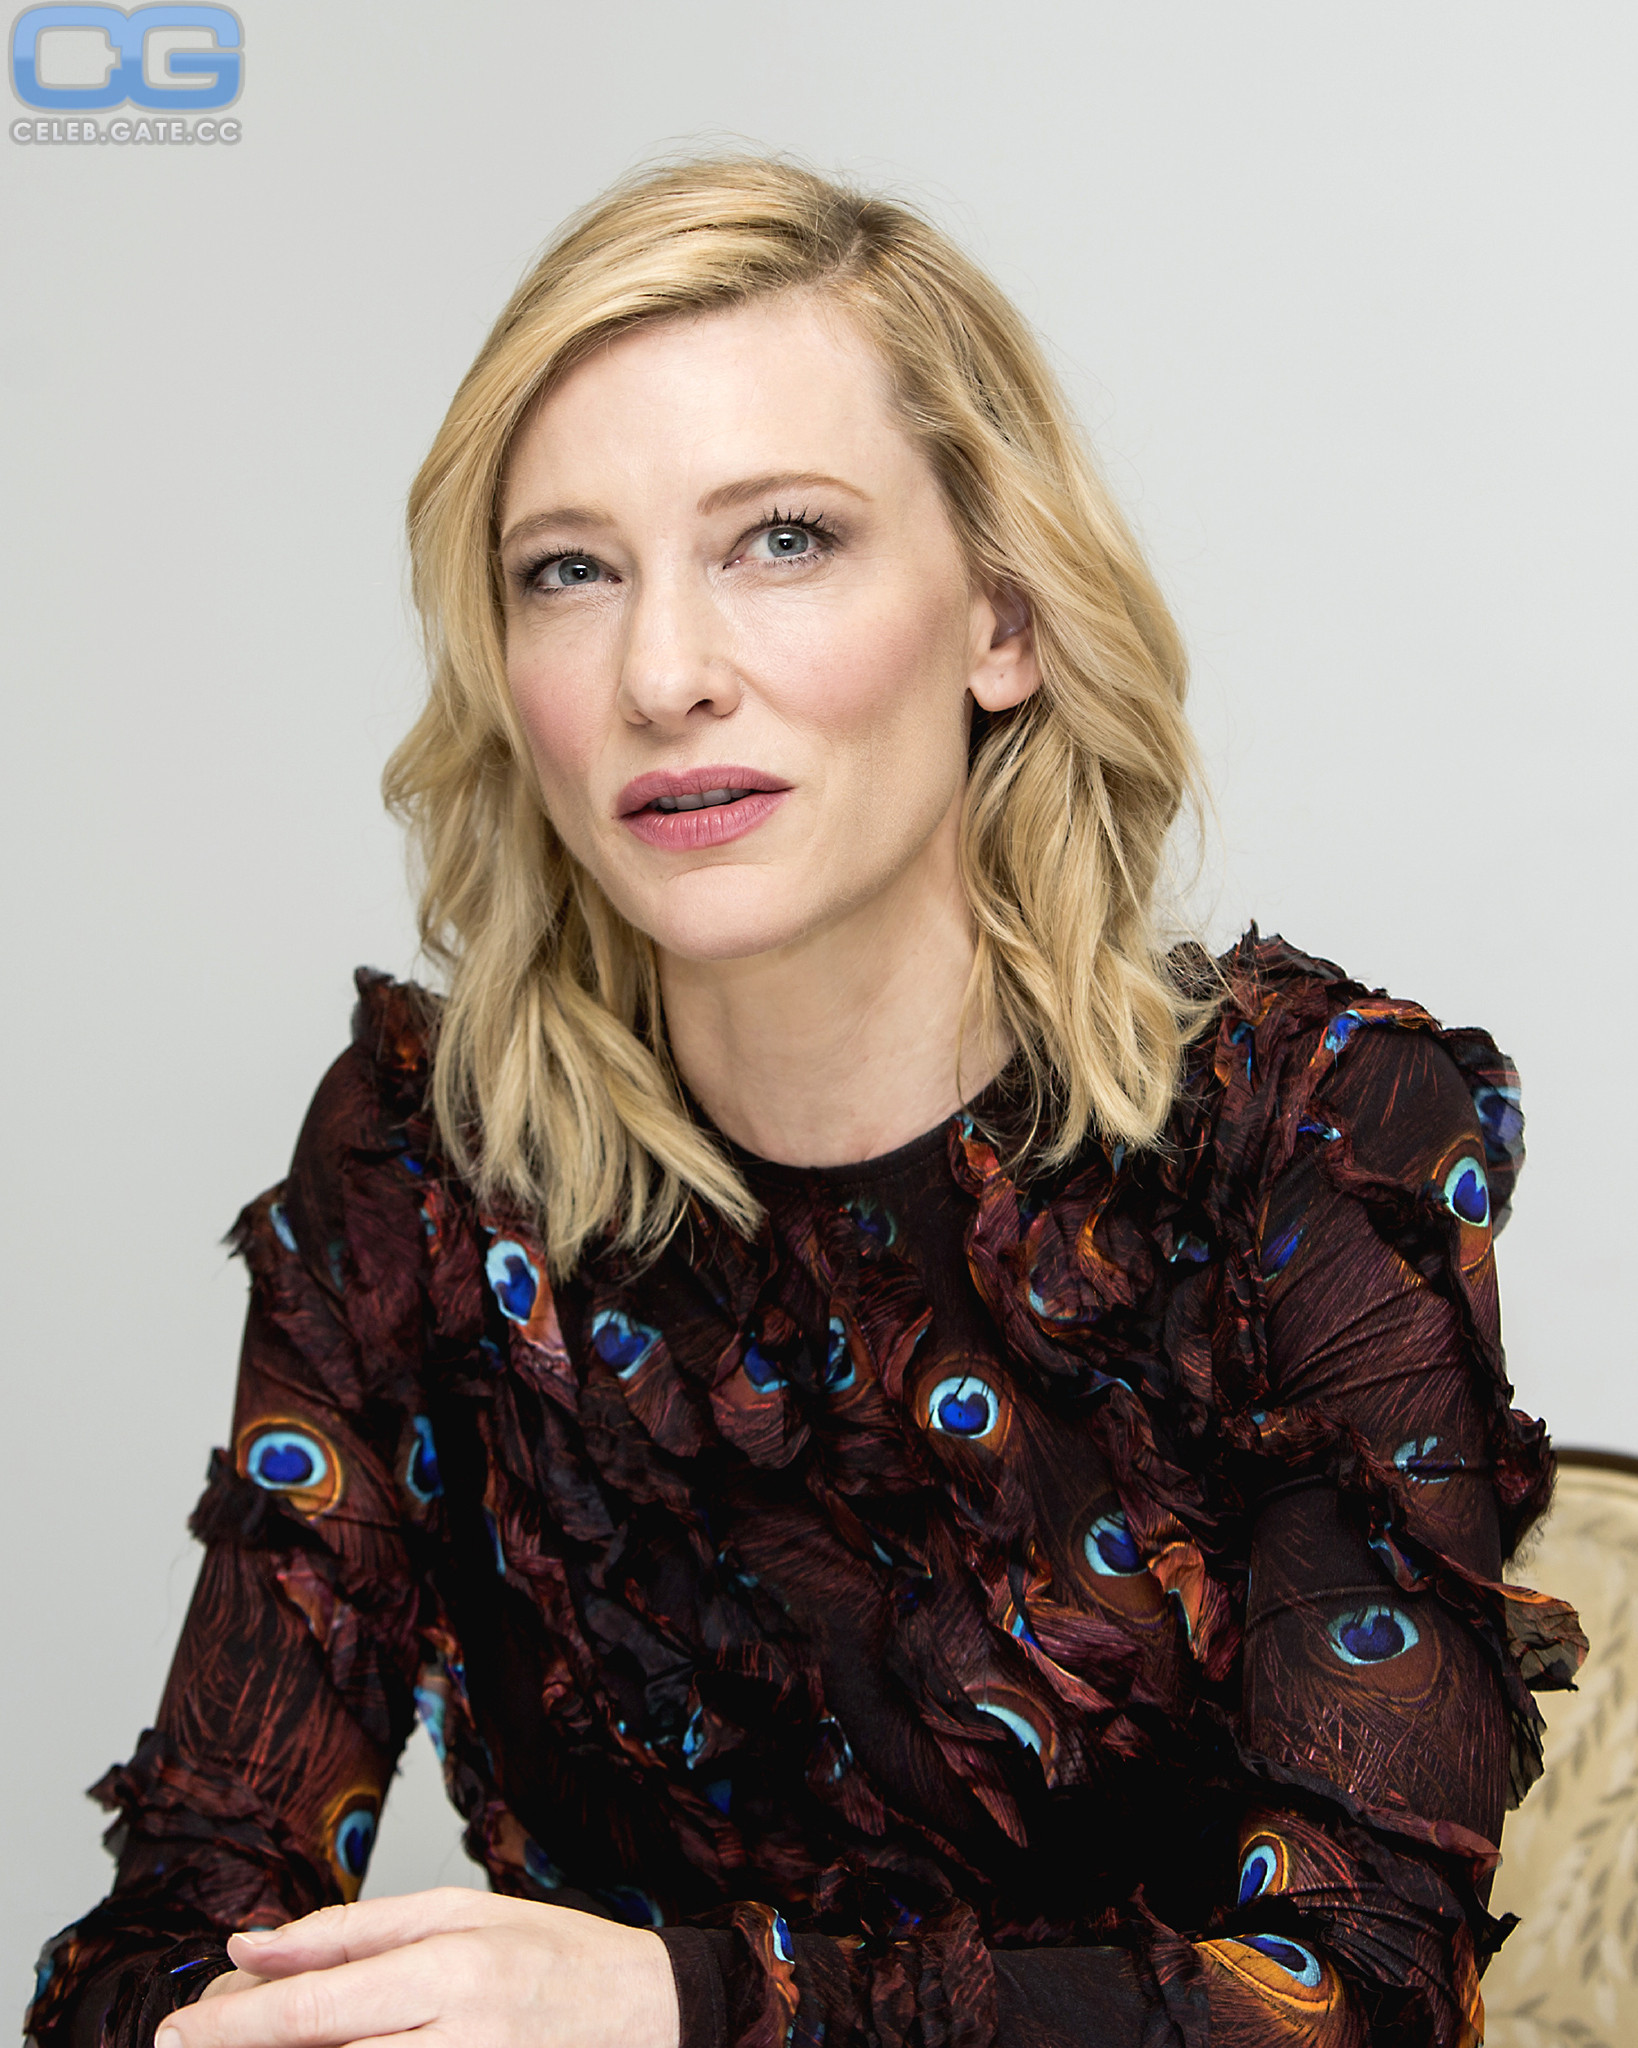 Cate Blanchett oops